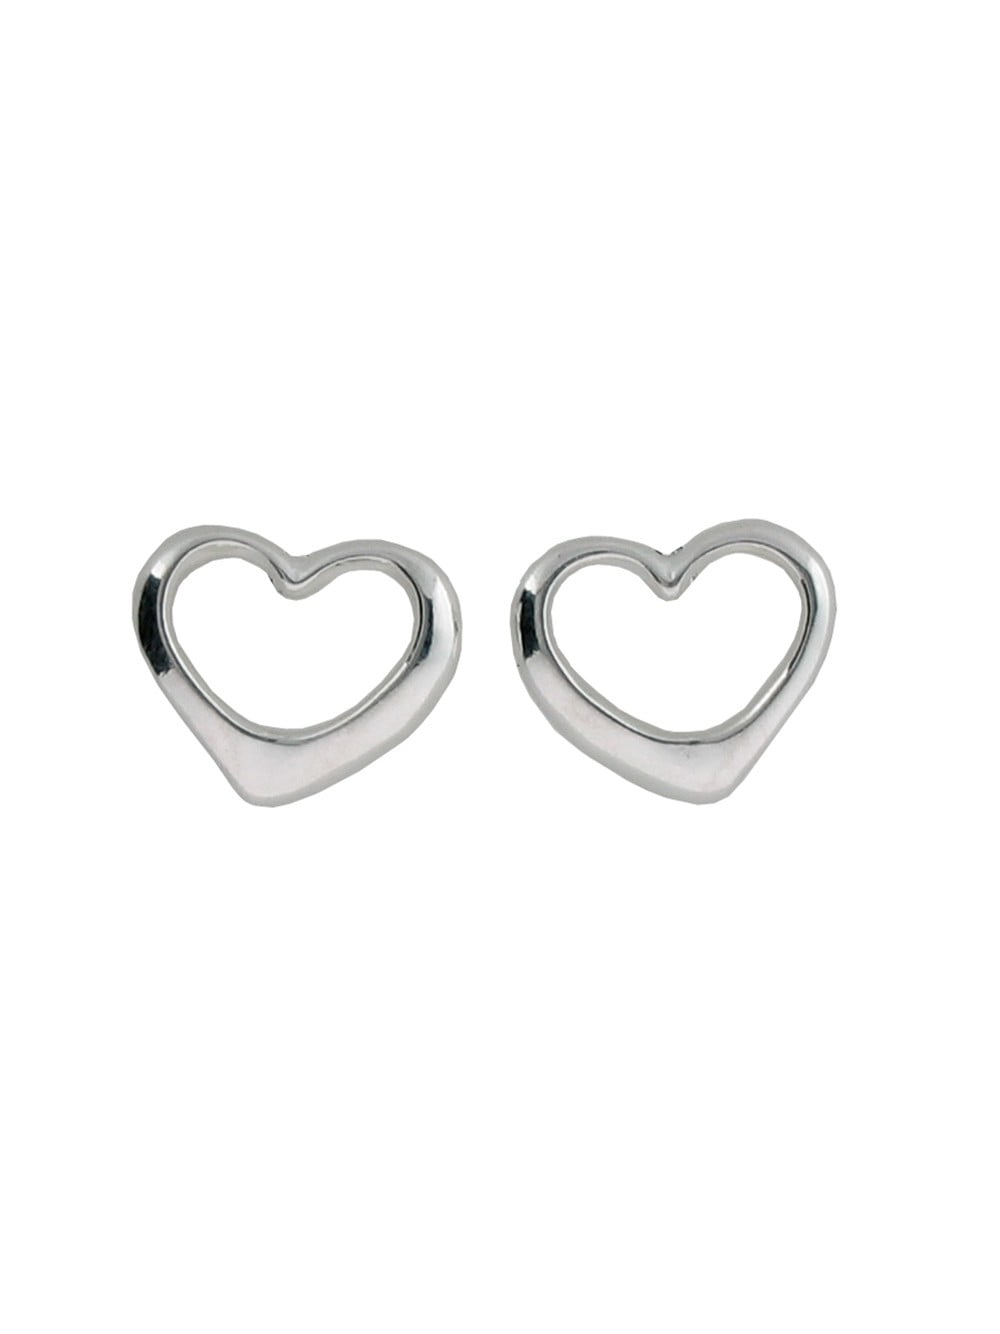 Nickel Free Hypoallergenic Sterling Silver Heart Tiny Stud Earrings 